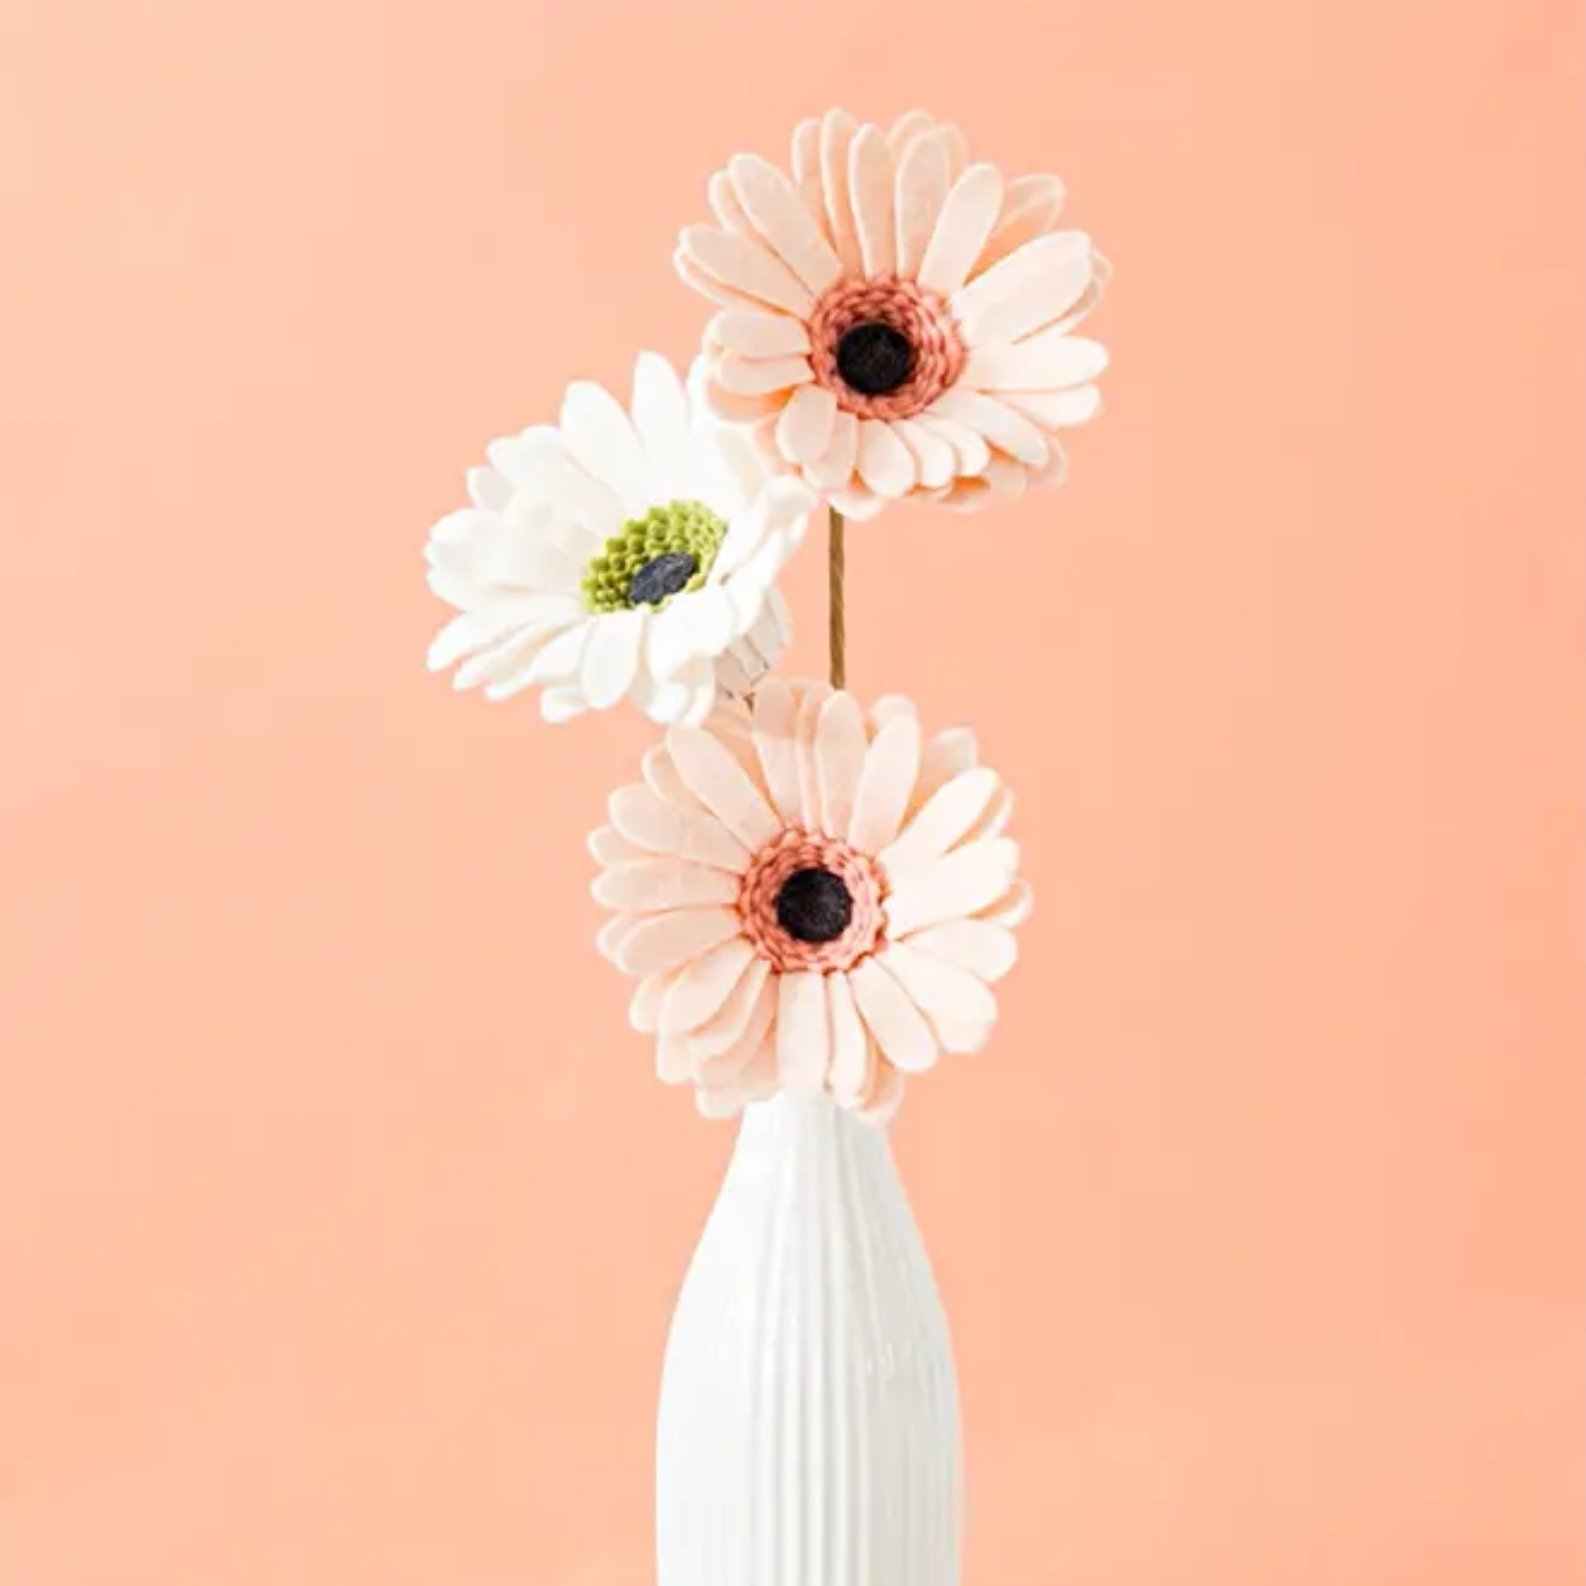 25+ DIY Felt Flower Tutorials — Gathering Beauty